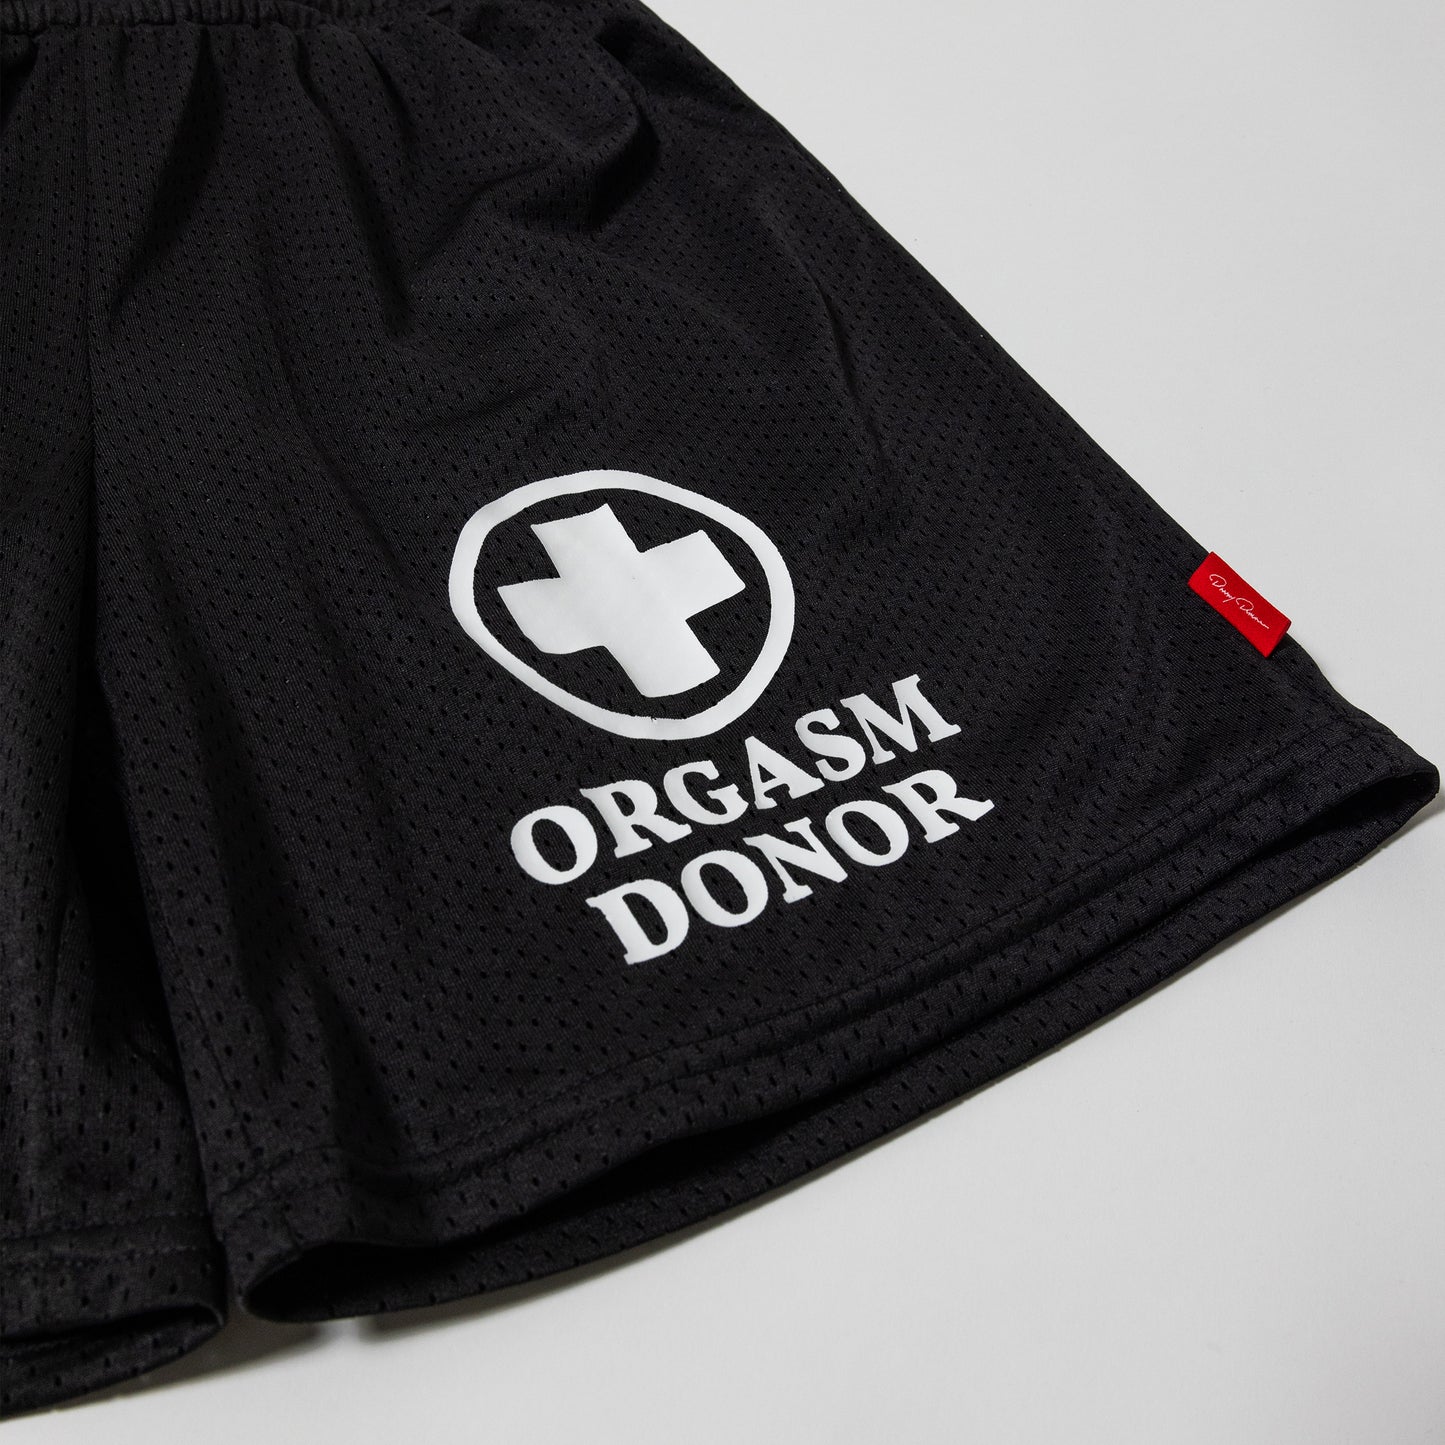 Orgasm Donor Black Mesh Shorts